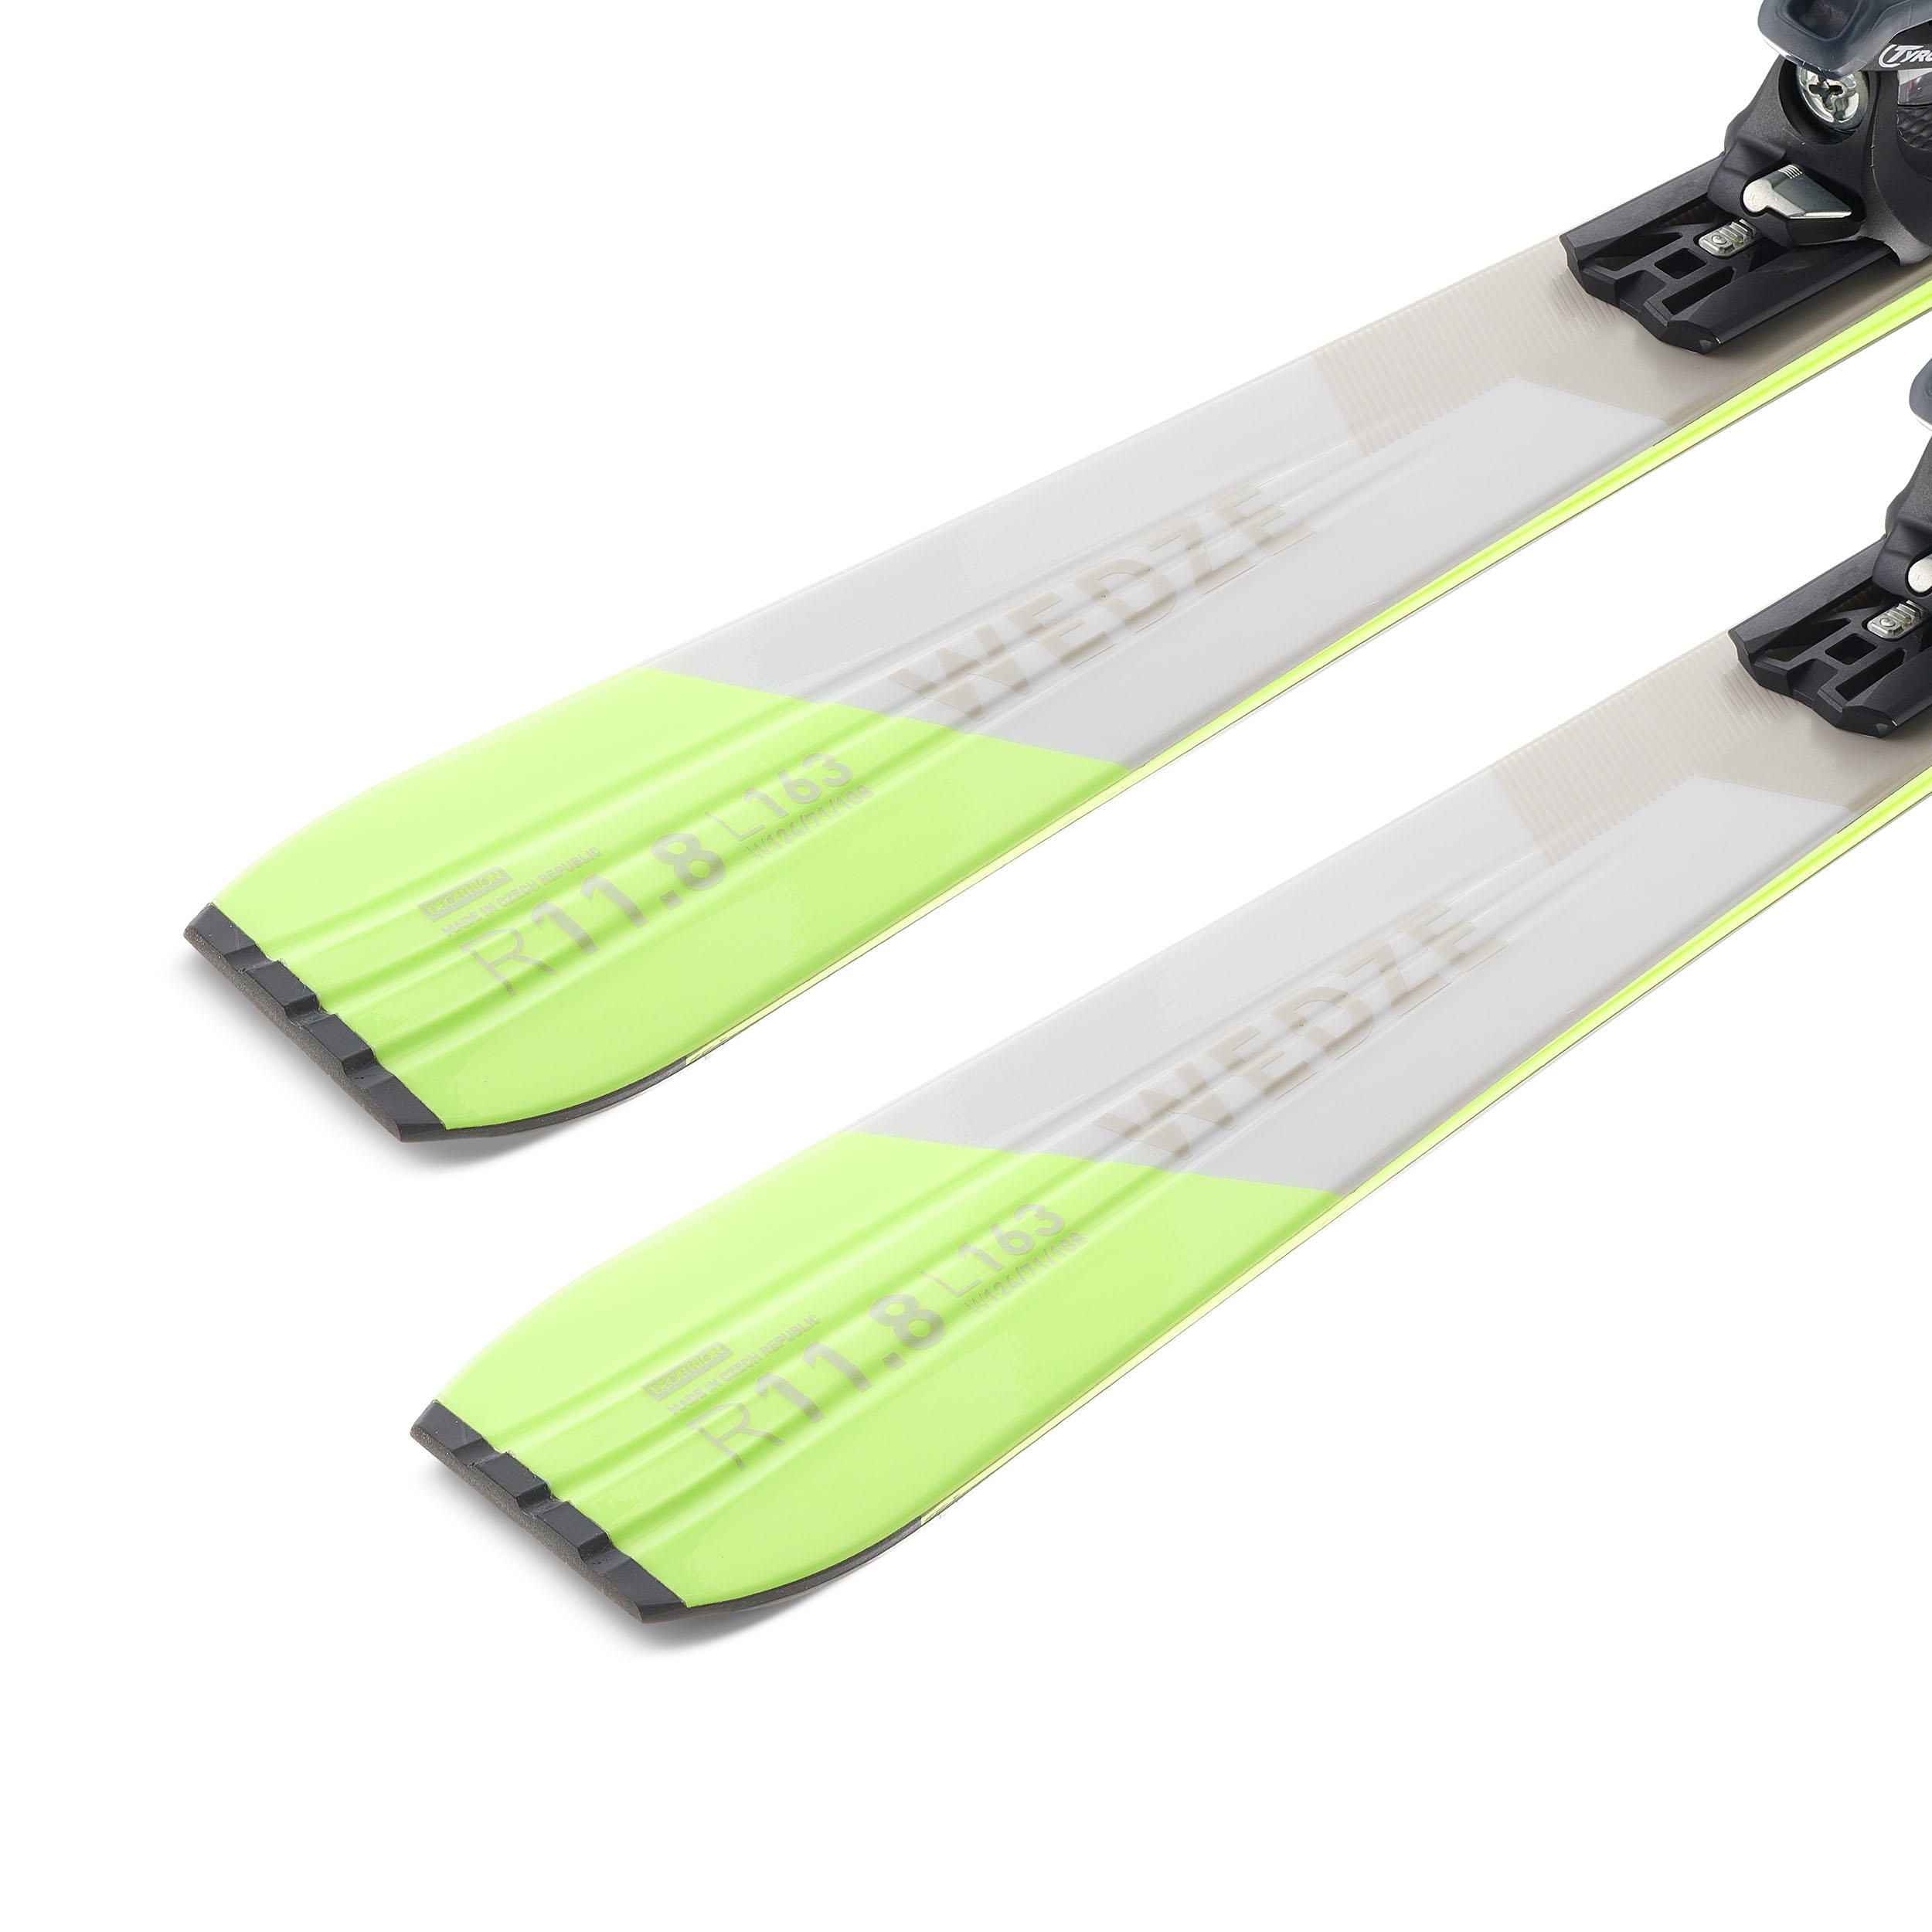 Women's Piste Ski with Binding - White 4/10